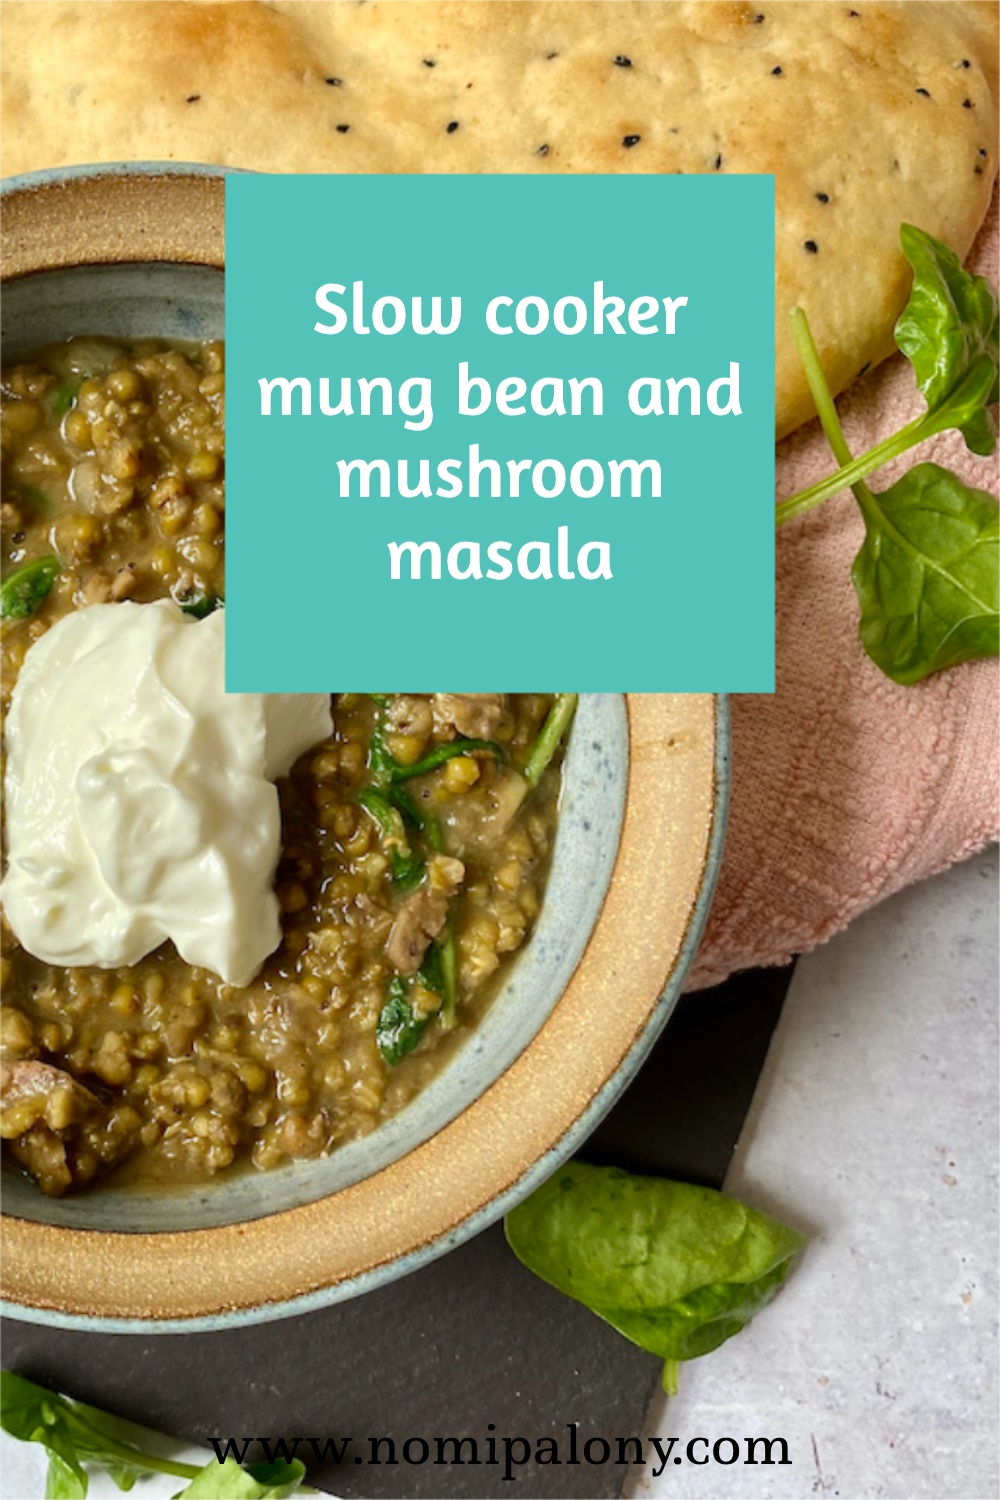 Slow cooker mung bean and mushroom masala - Nomipalony